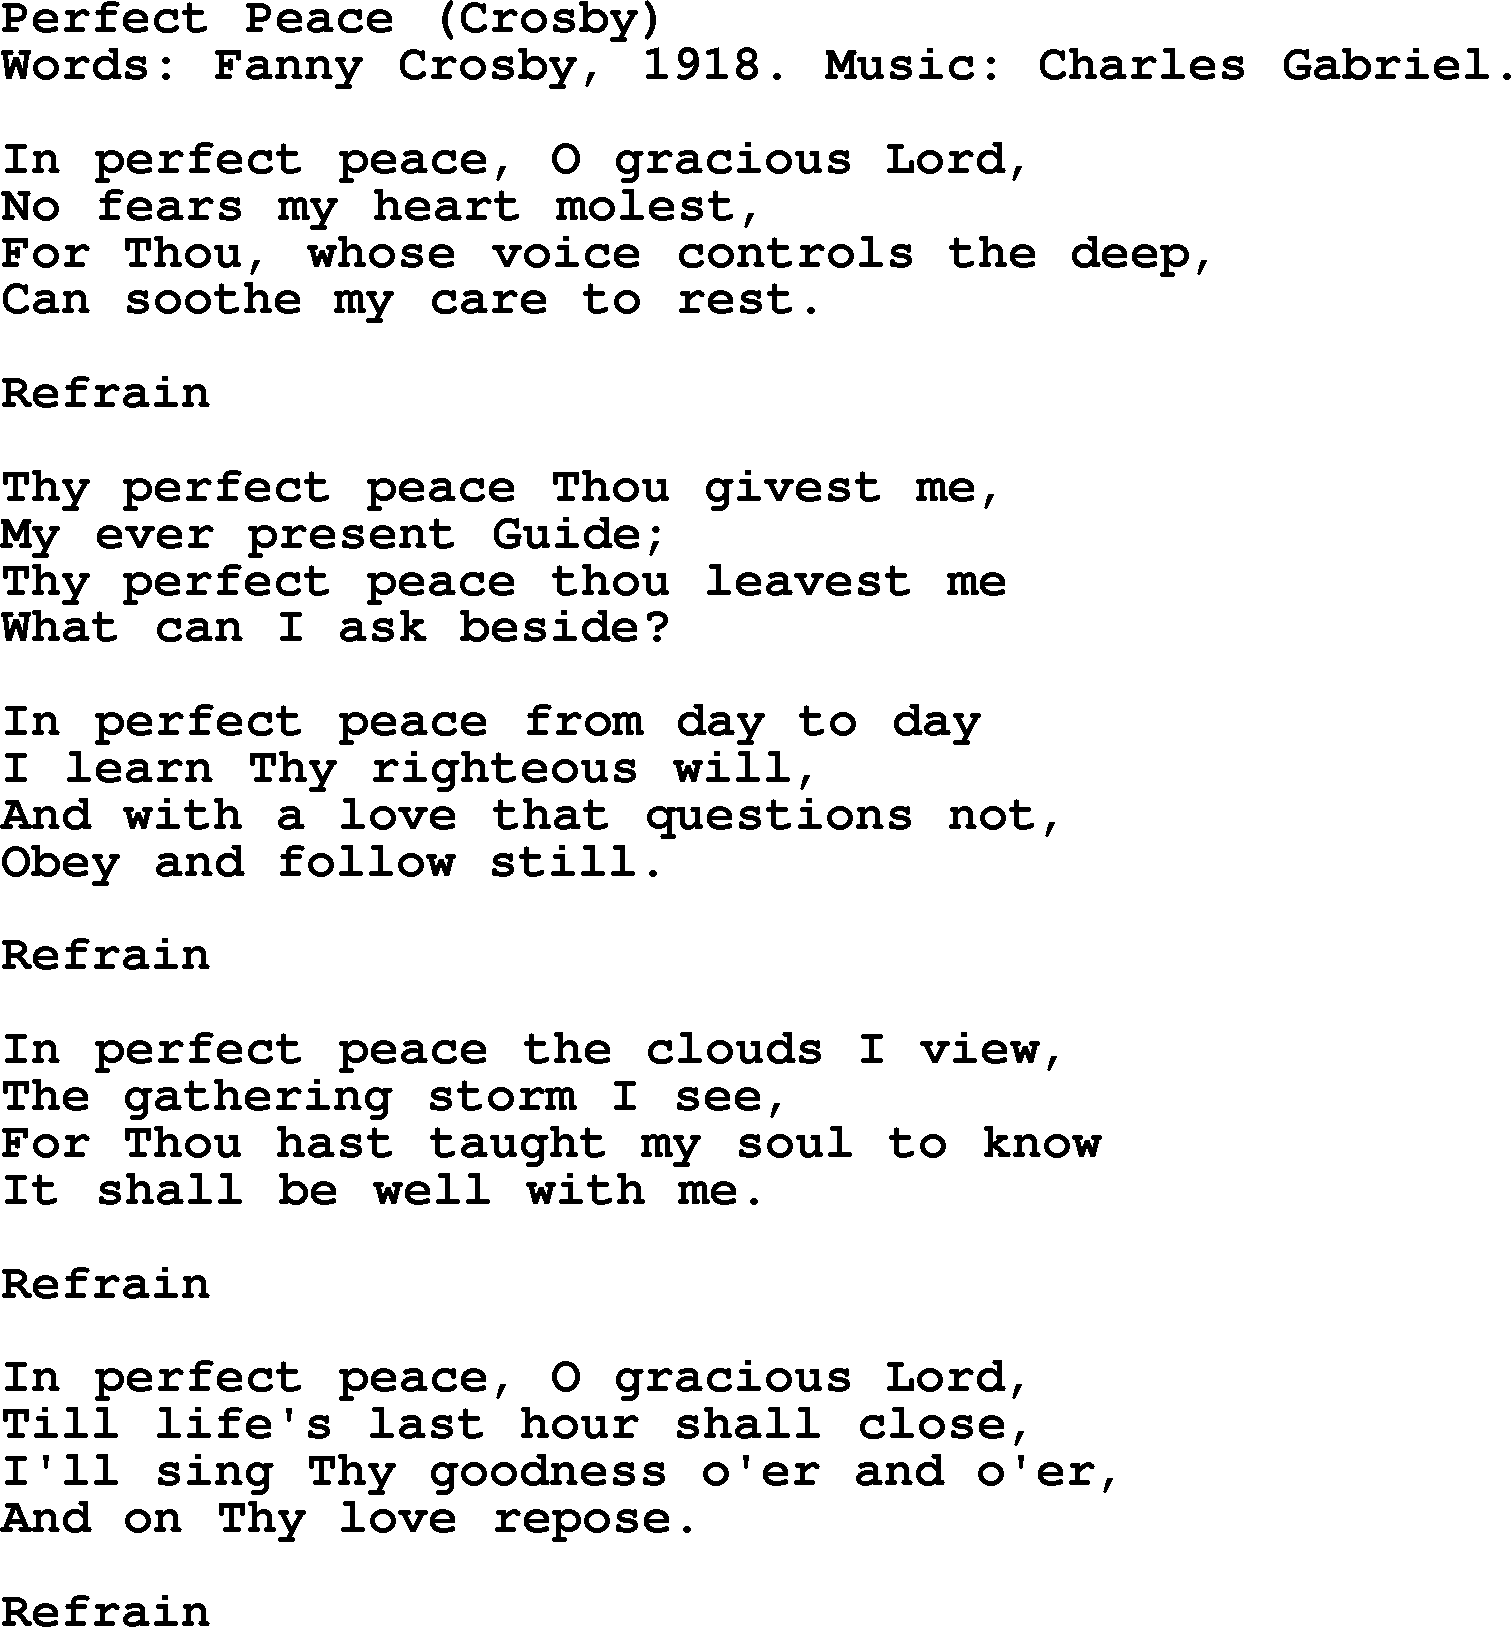 Fanny Crosby song: Perfect Peace, lyrics